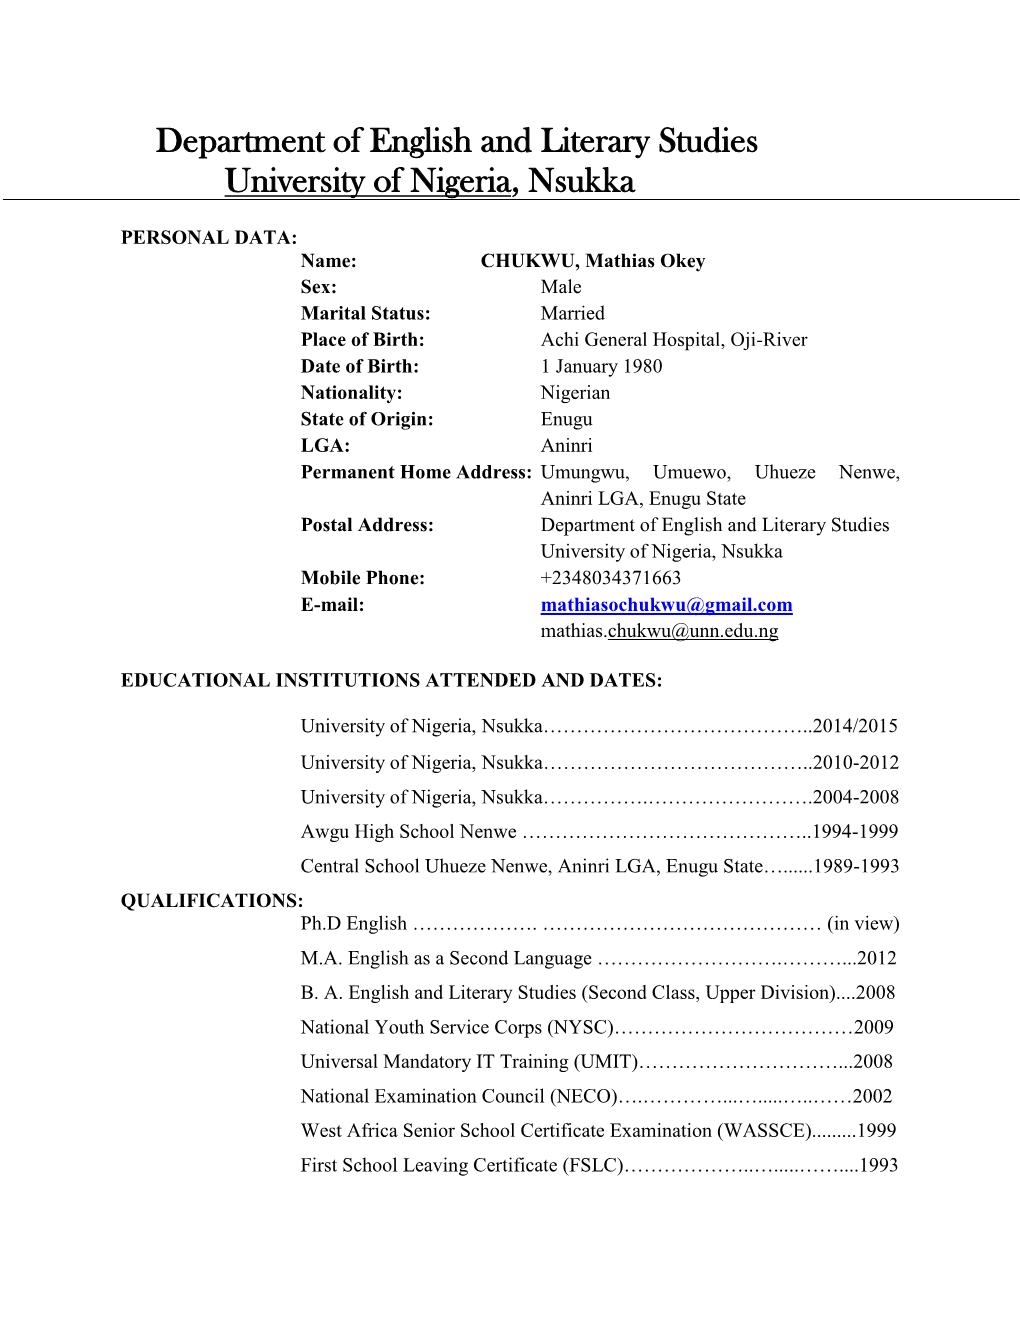 Department of English and Literary Studies University of Nigeria, Nsukka